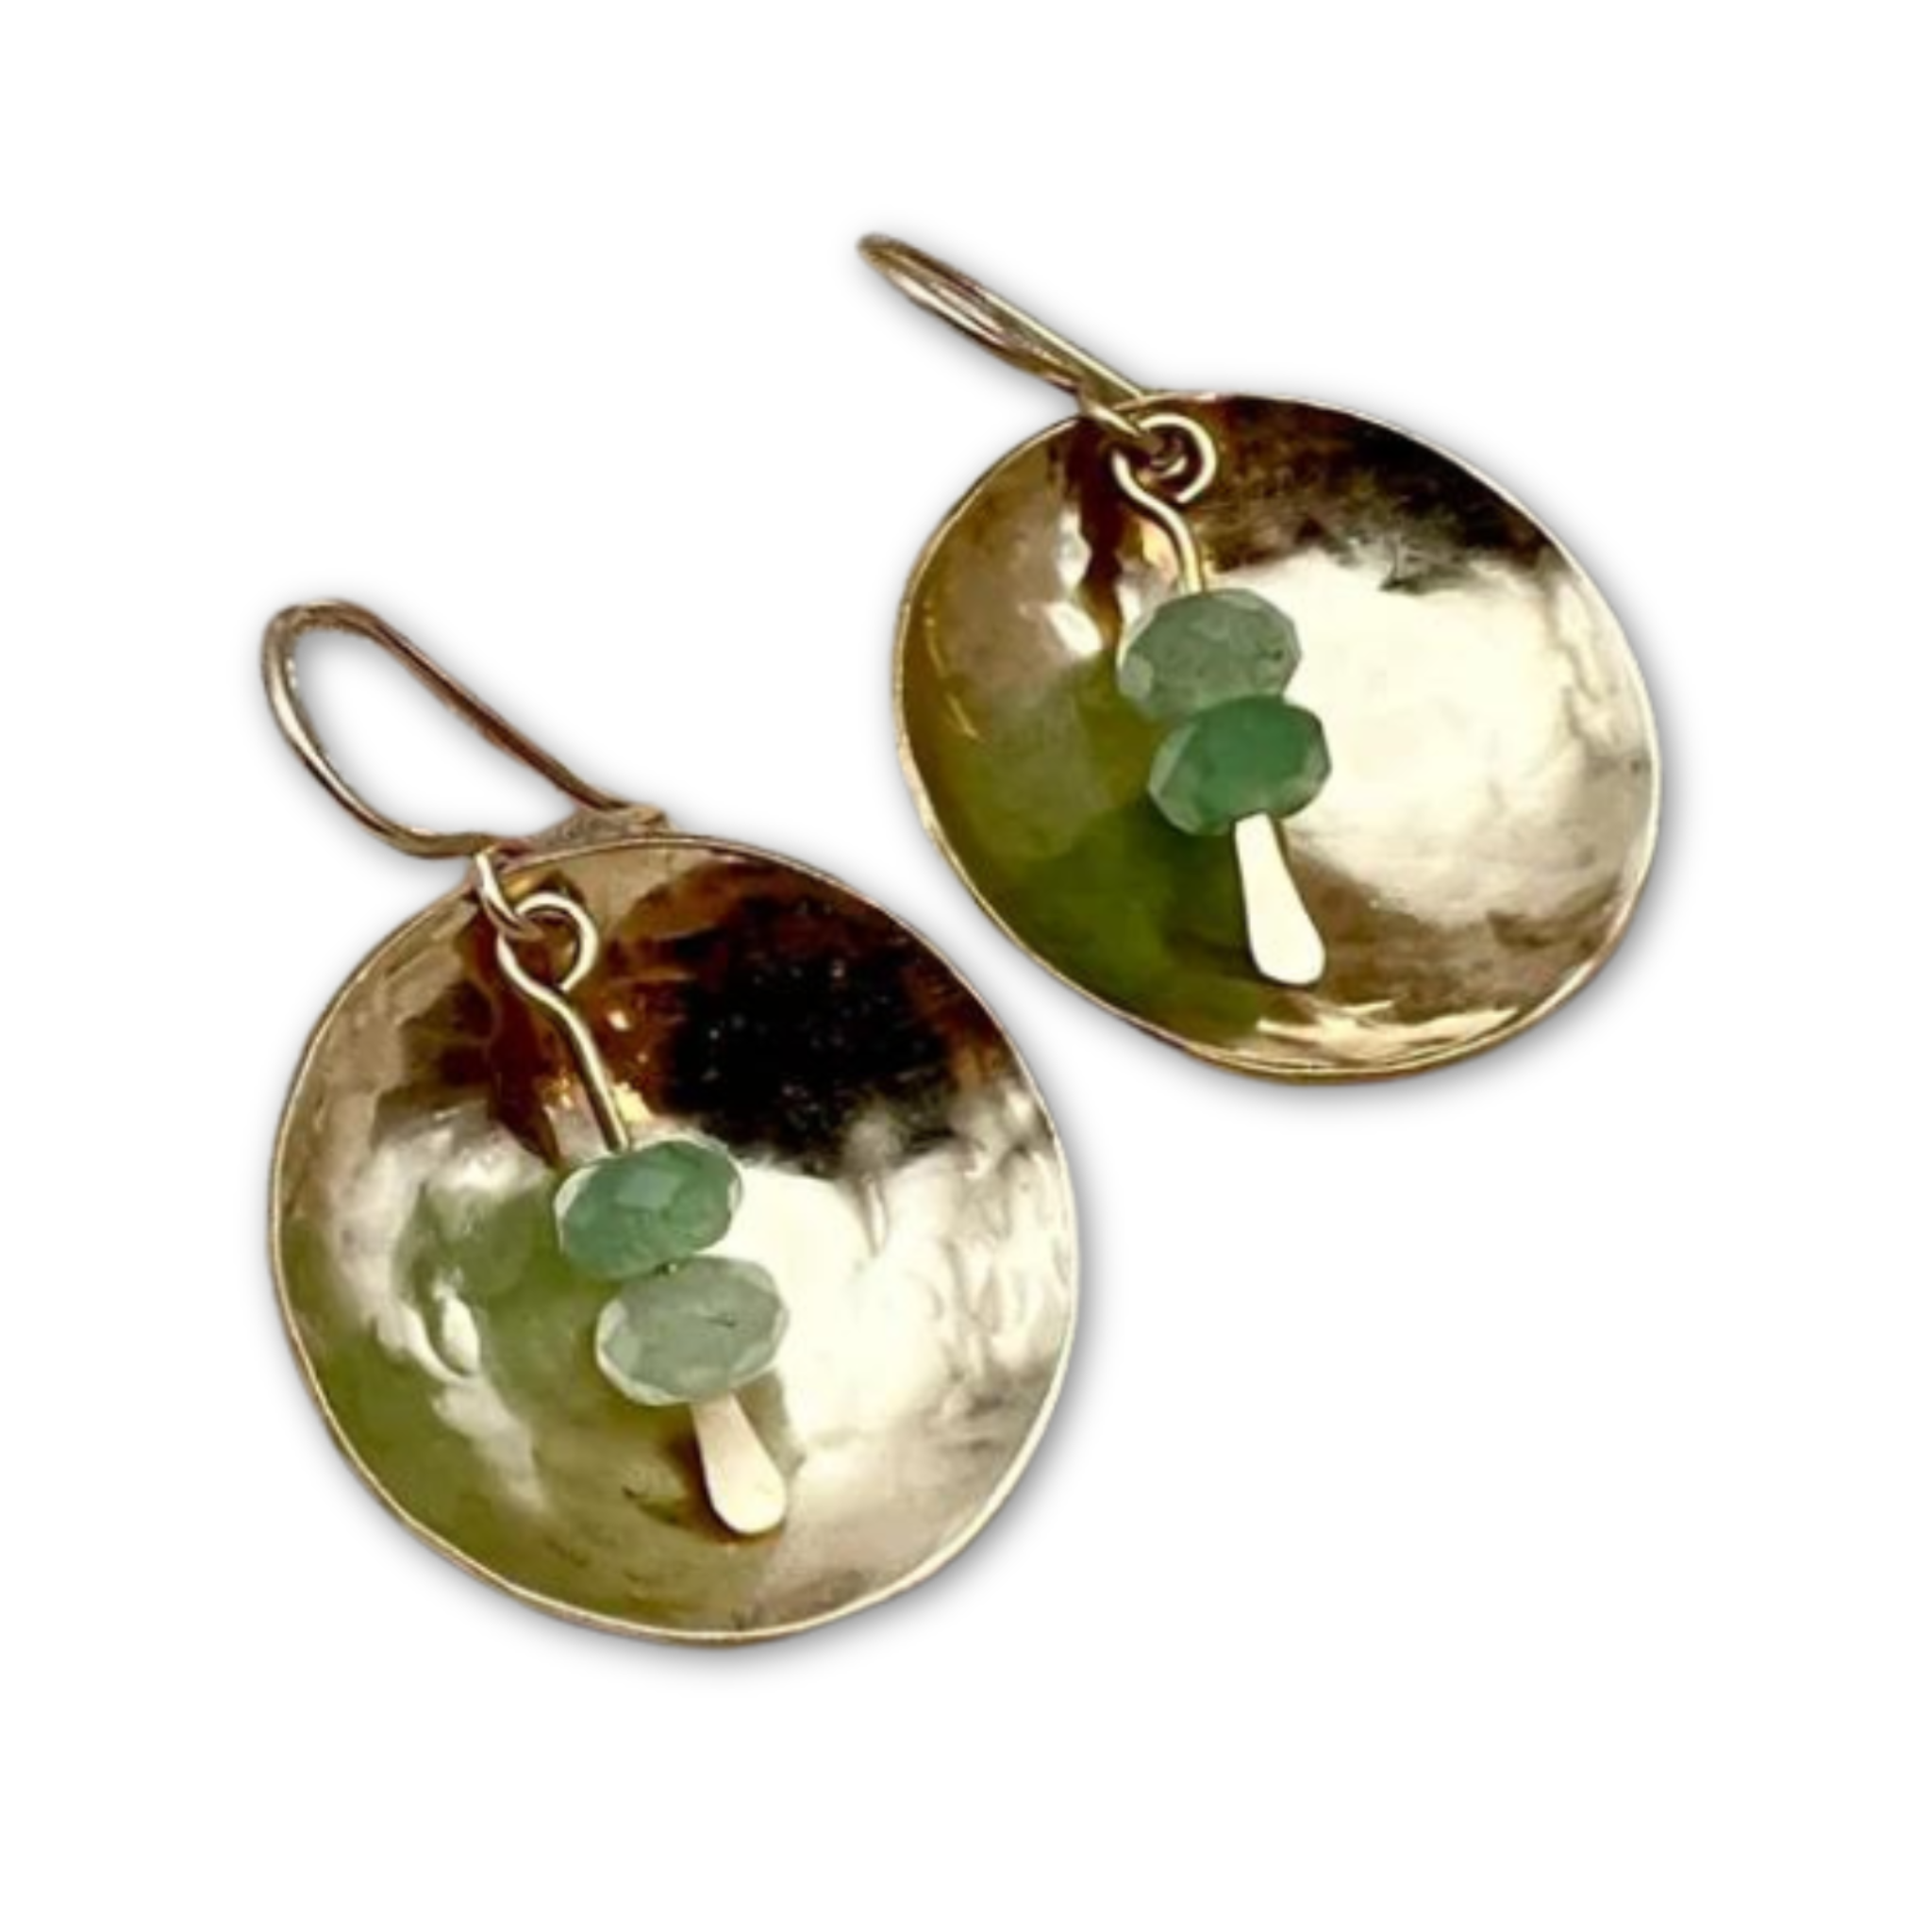 textured pendant earrings with green aventurine stones